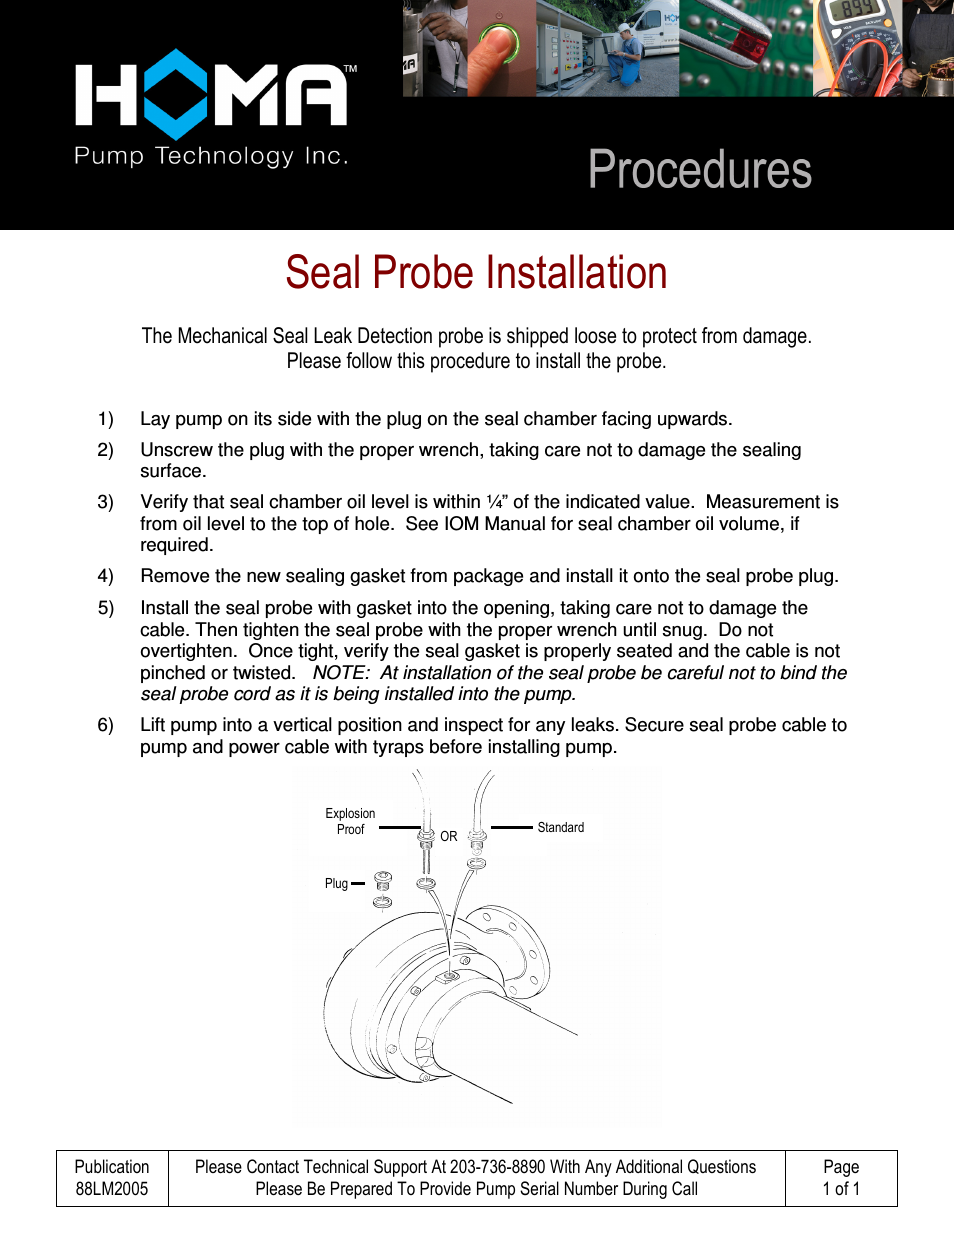 External Seal Probe Installation